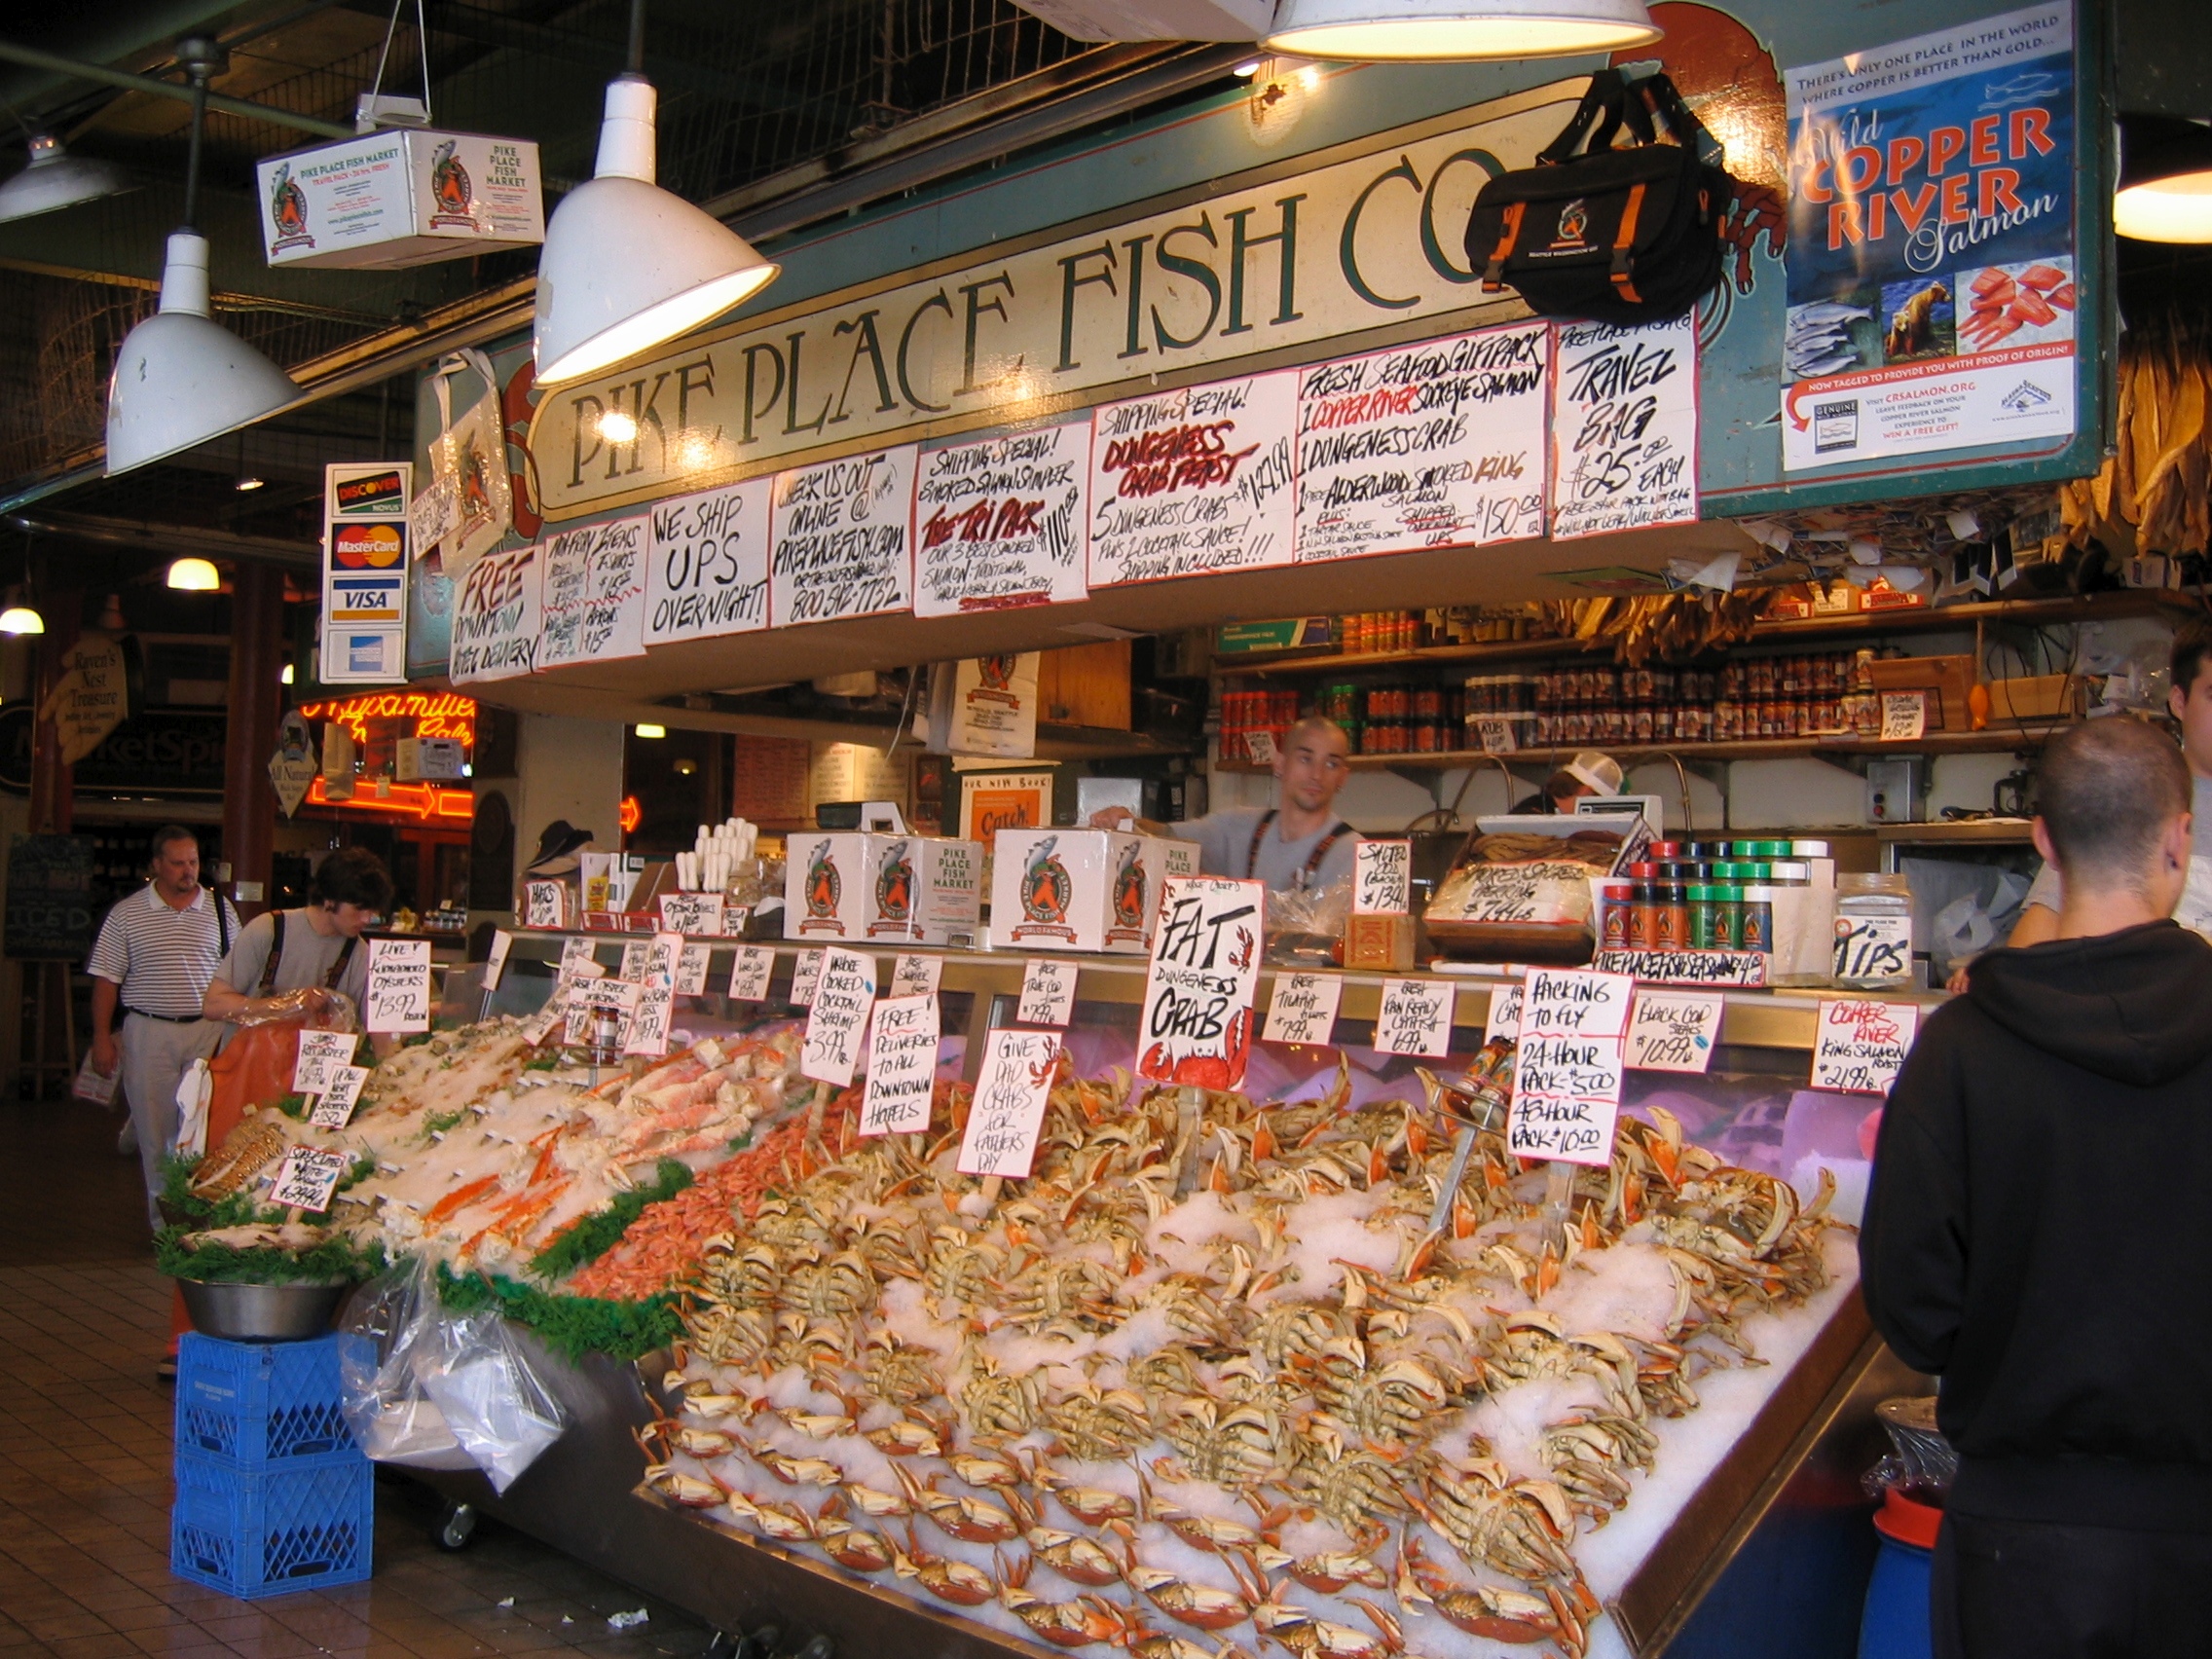 File:Pike Place Fish 1.jpg - Wikimedia Commons